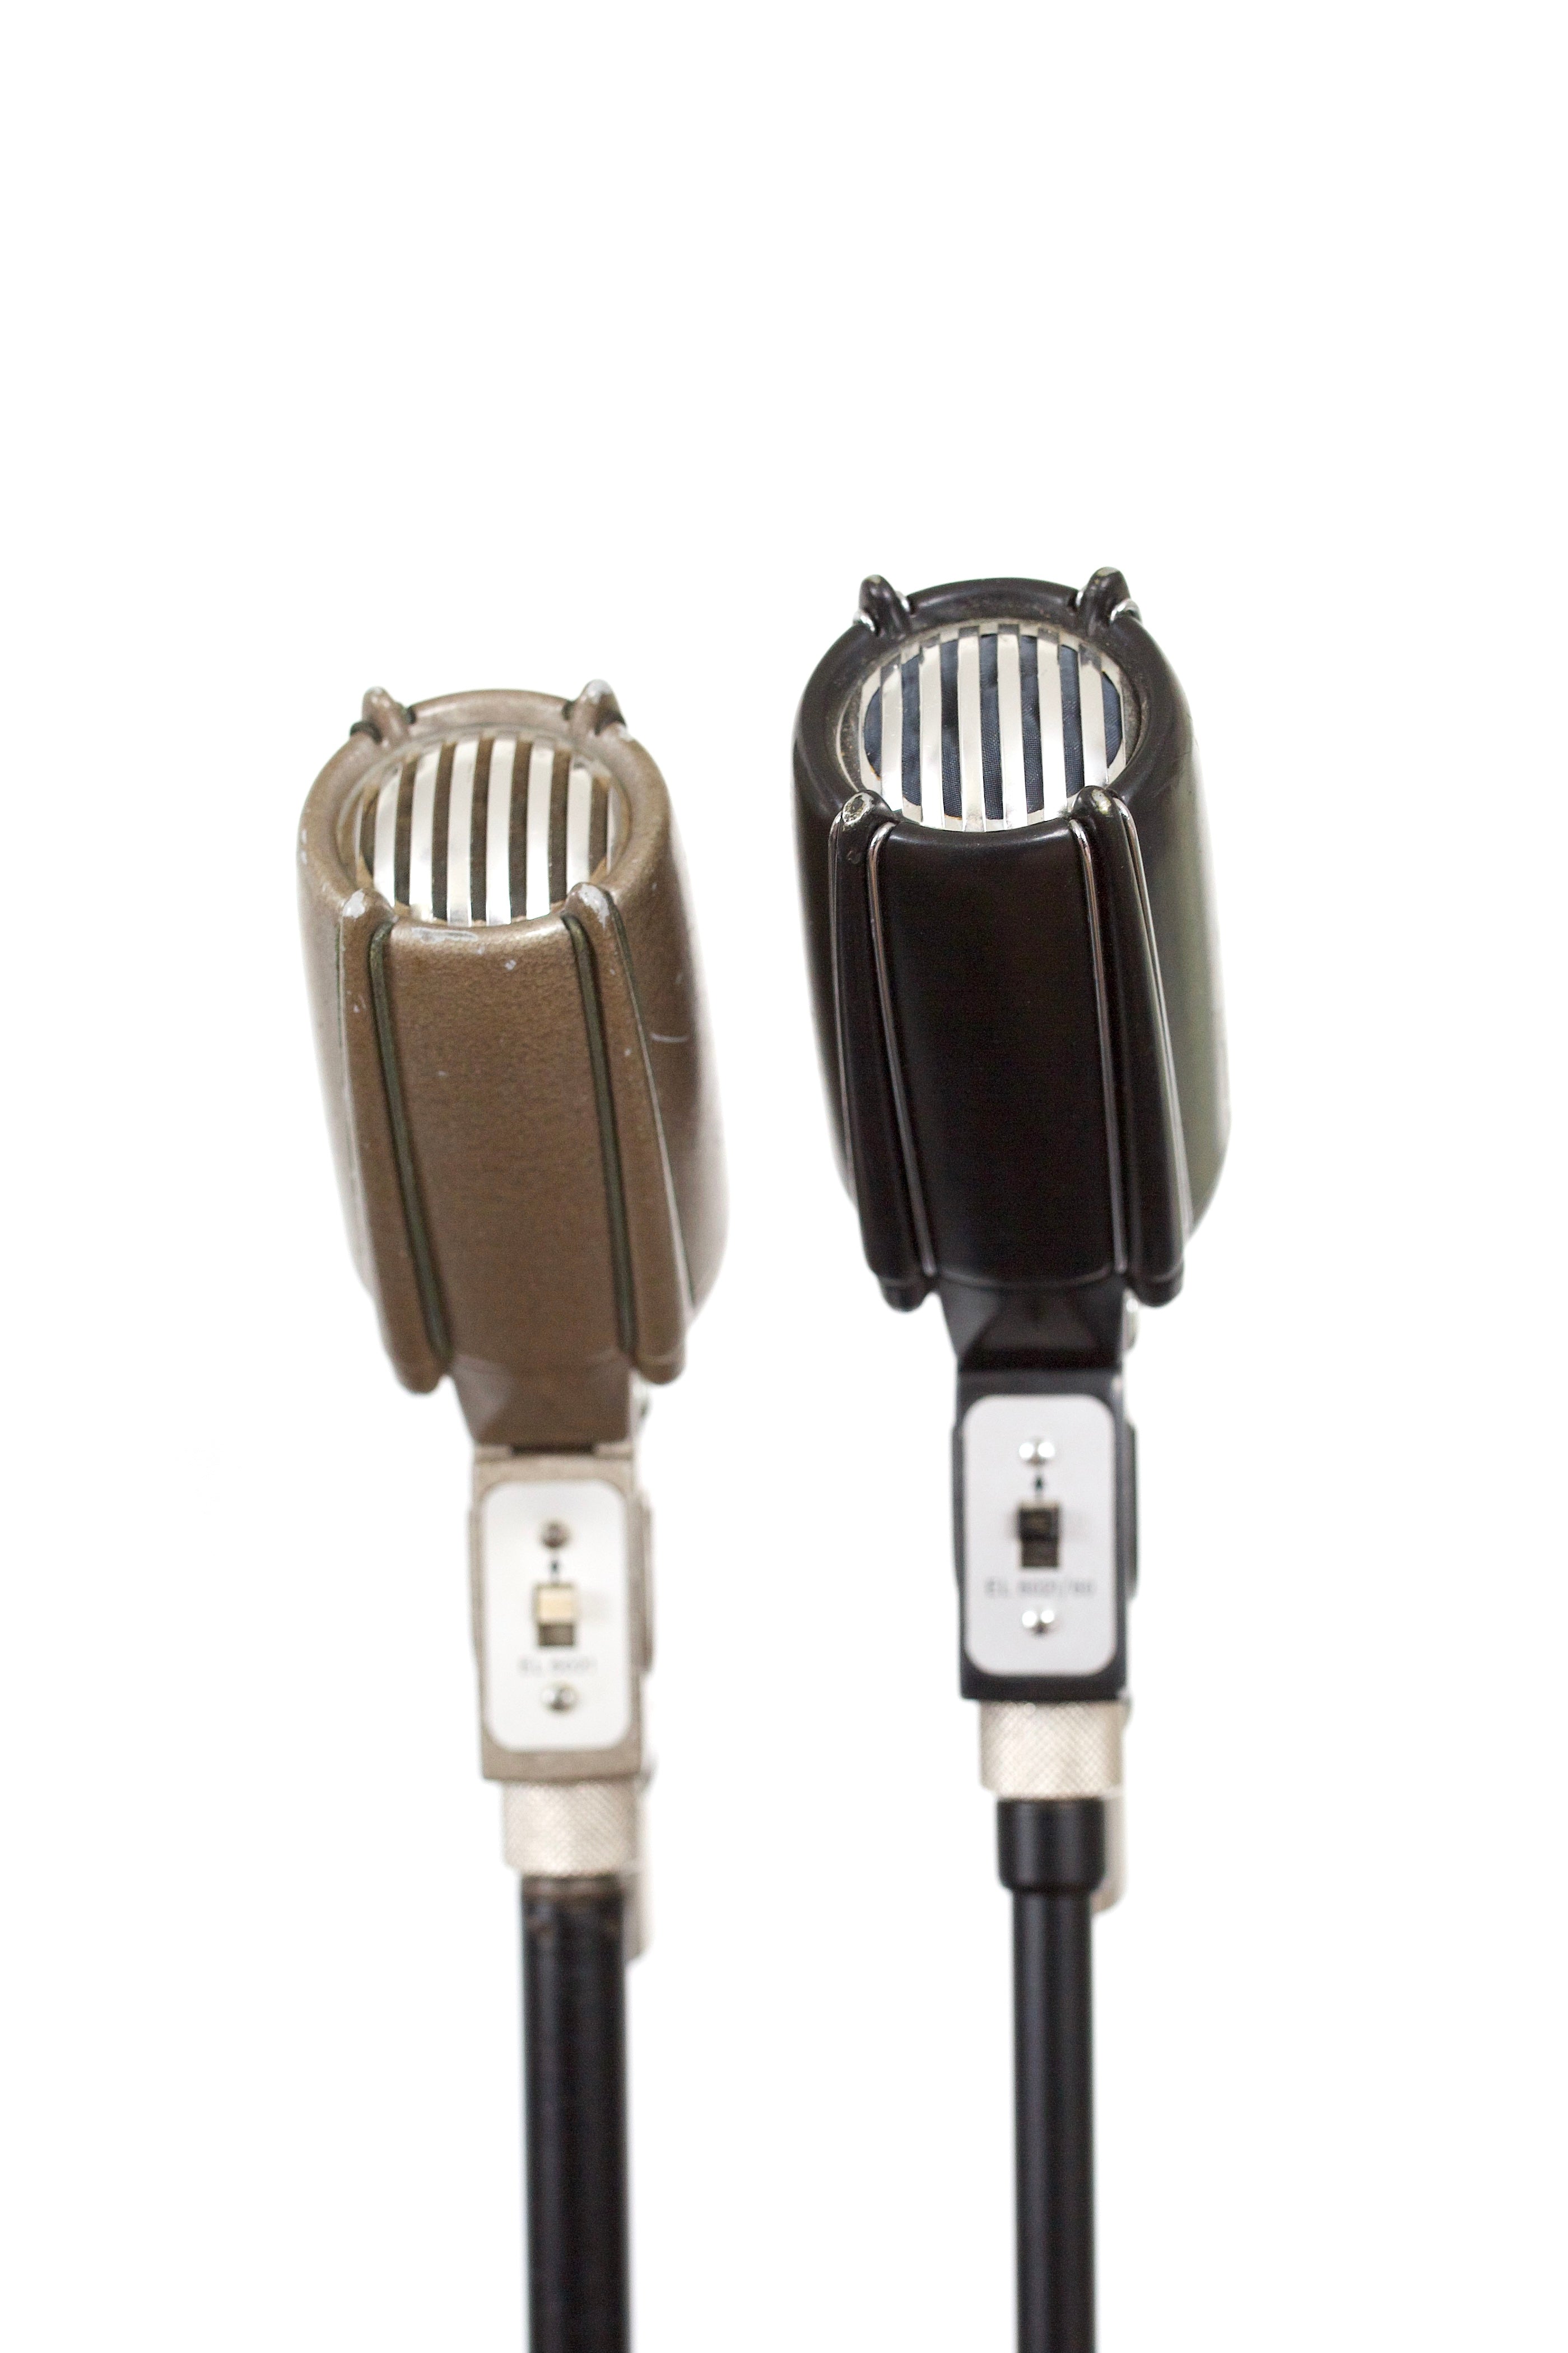 Philips EL6021 Dynamic Microphone